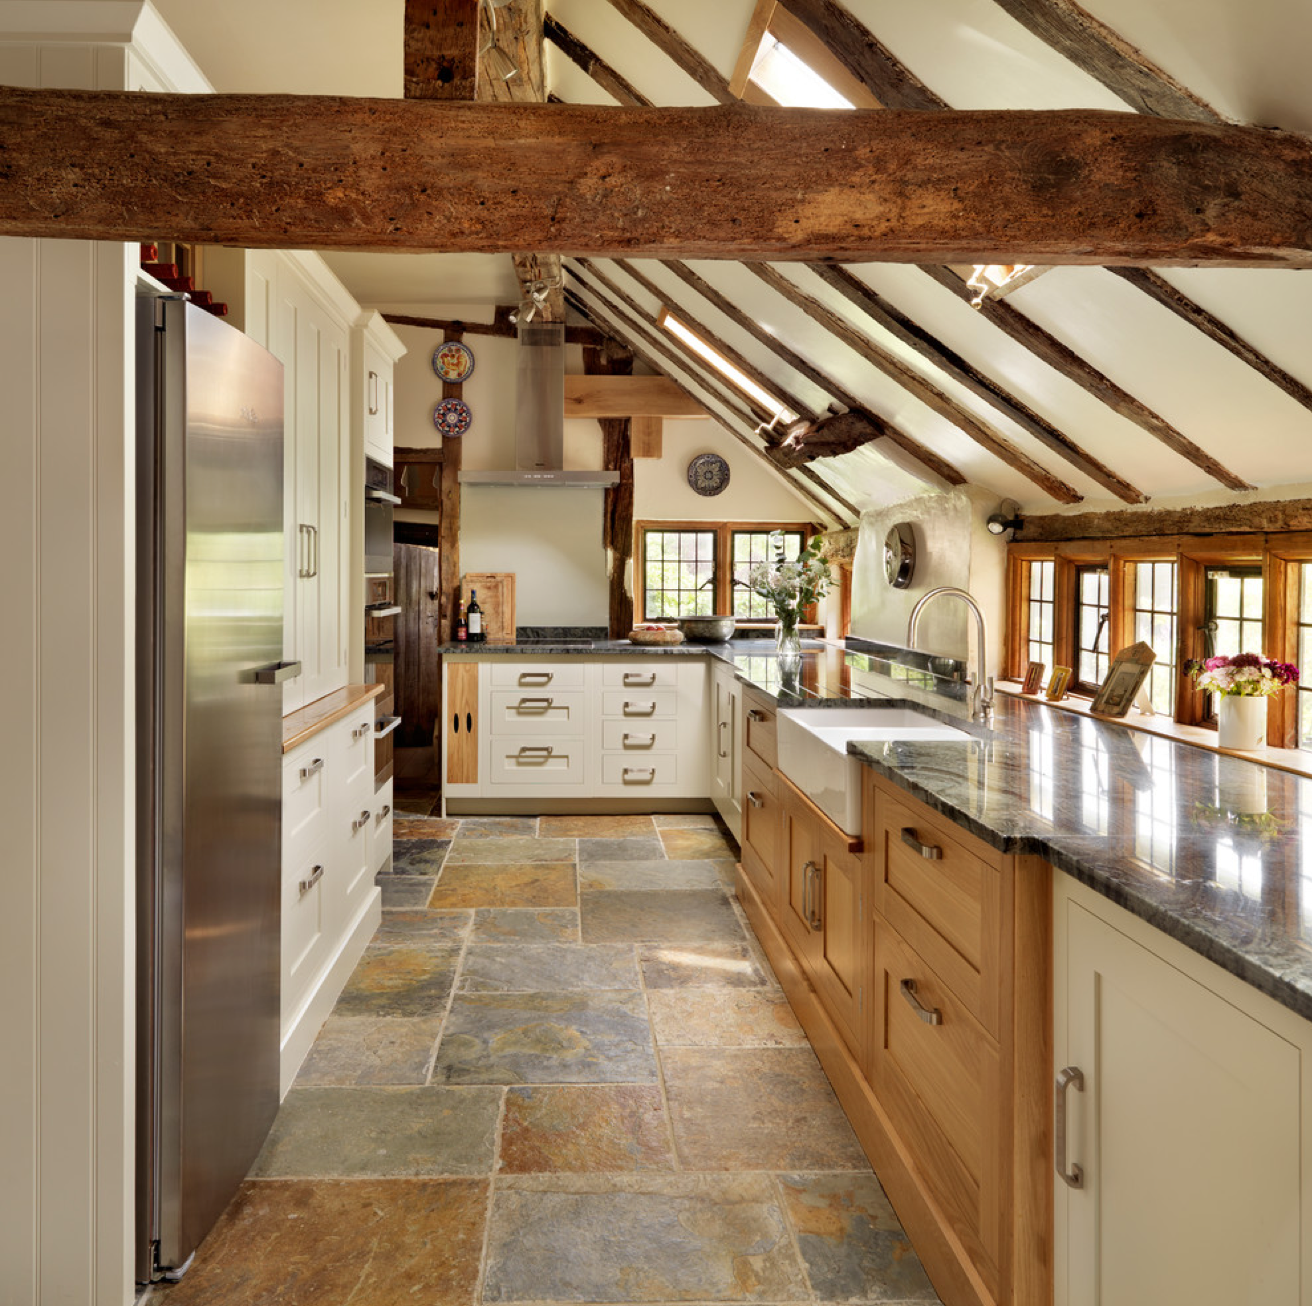 Stunning Kitchen Designs with 2-Toned Cabinets | Shaker Farmhoue Kitchen via Houzz from Harvey Jones Kitchens